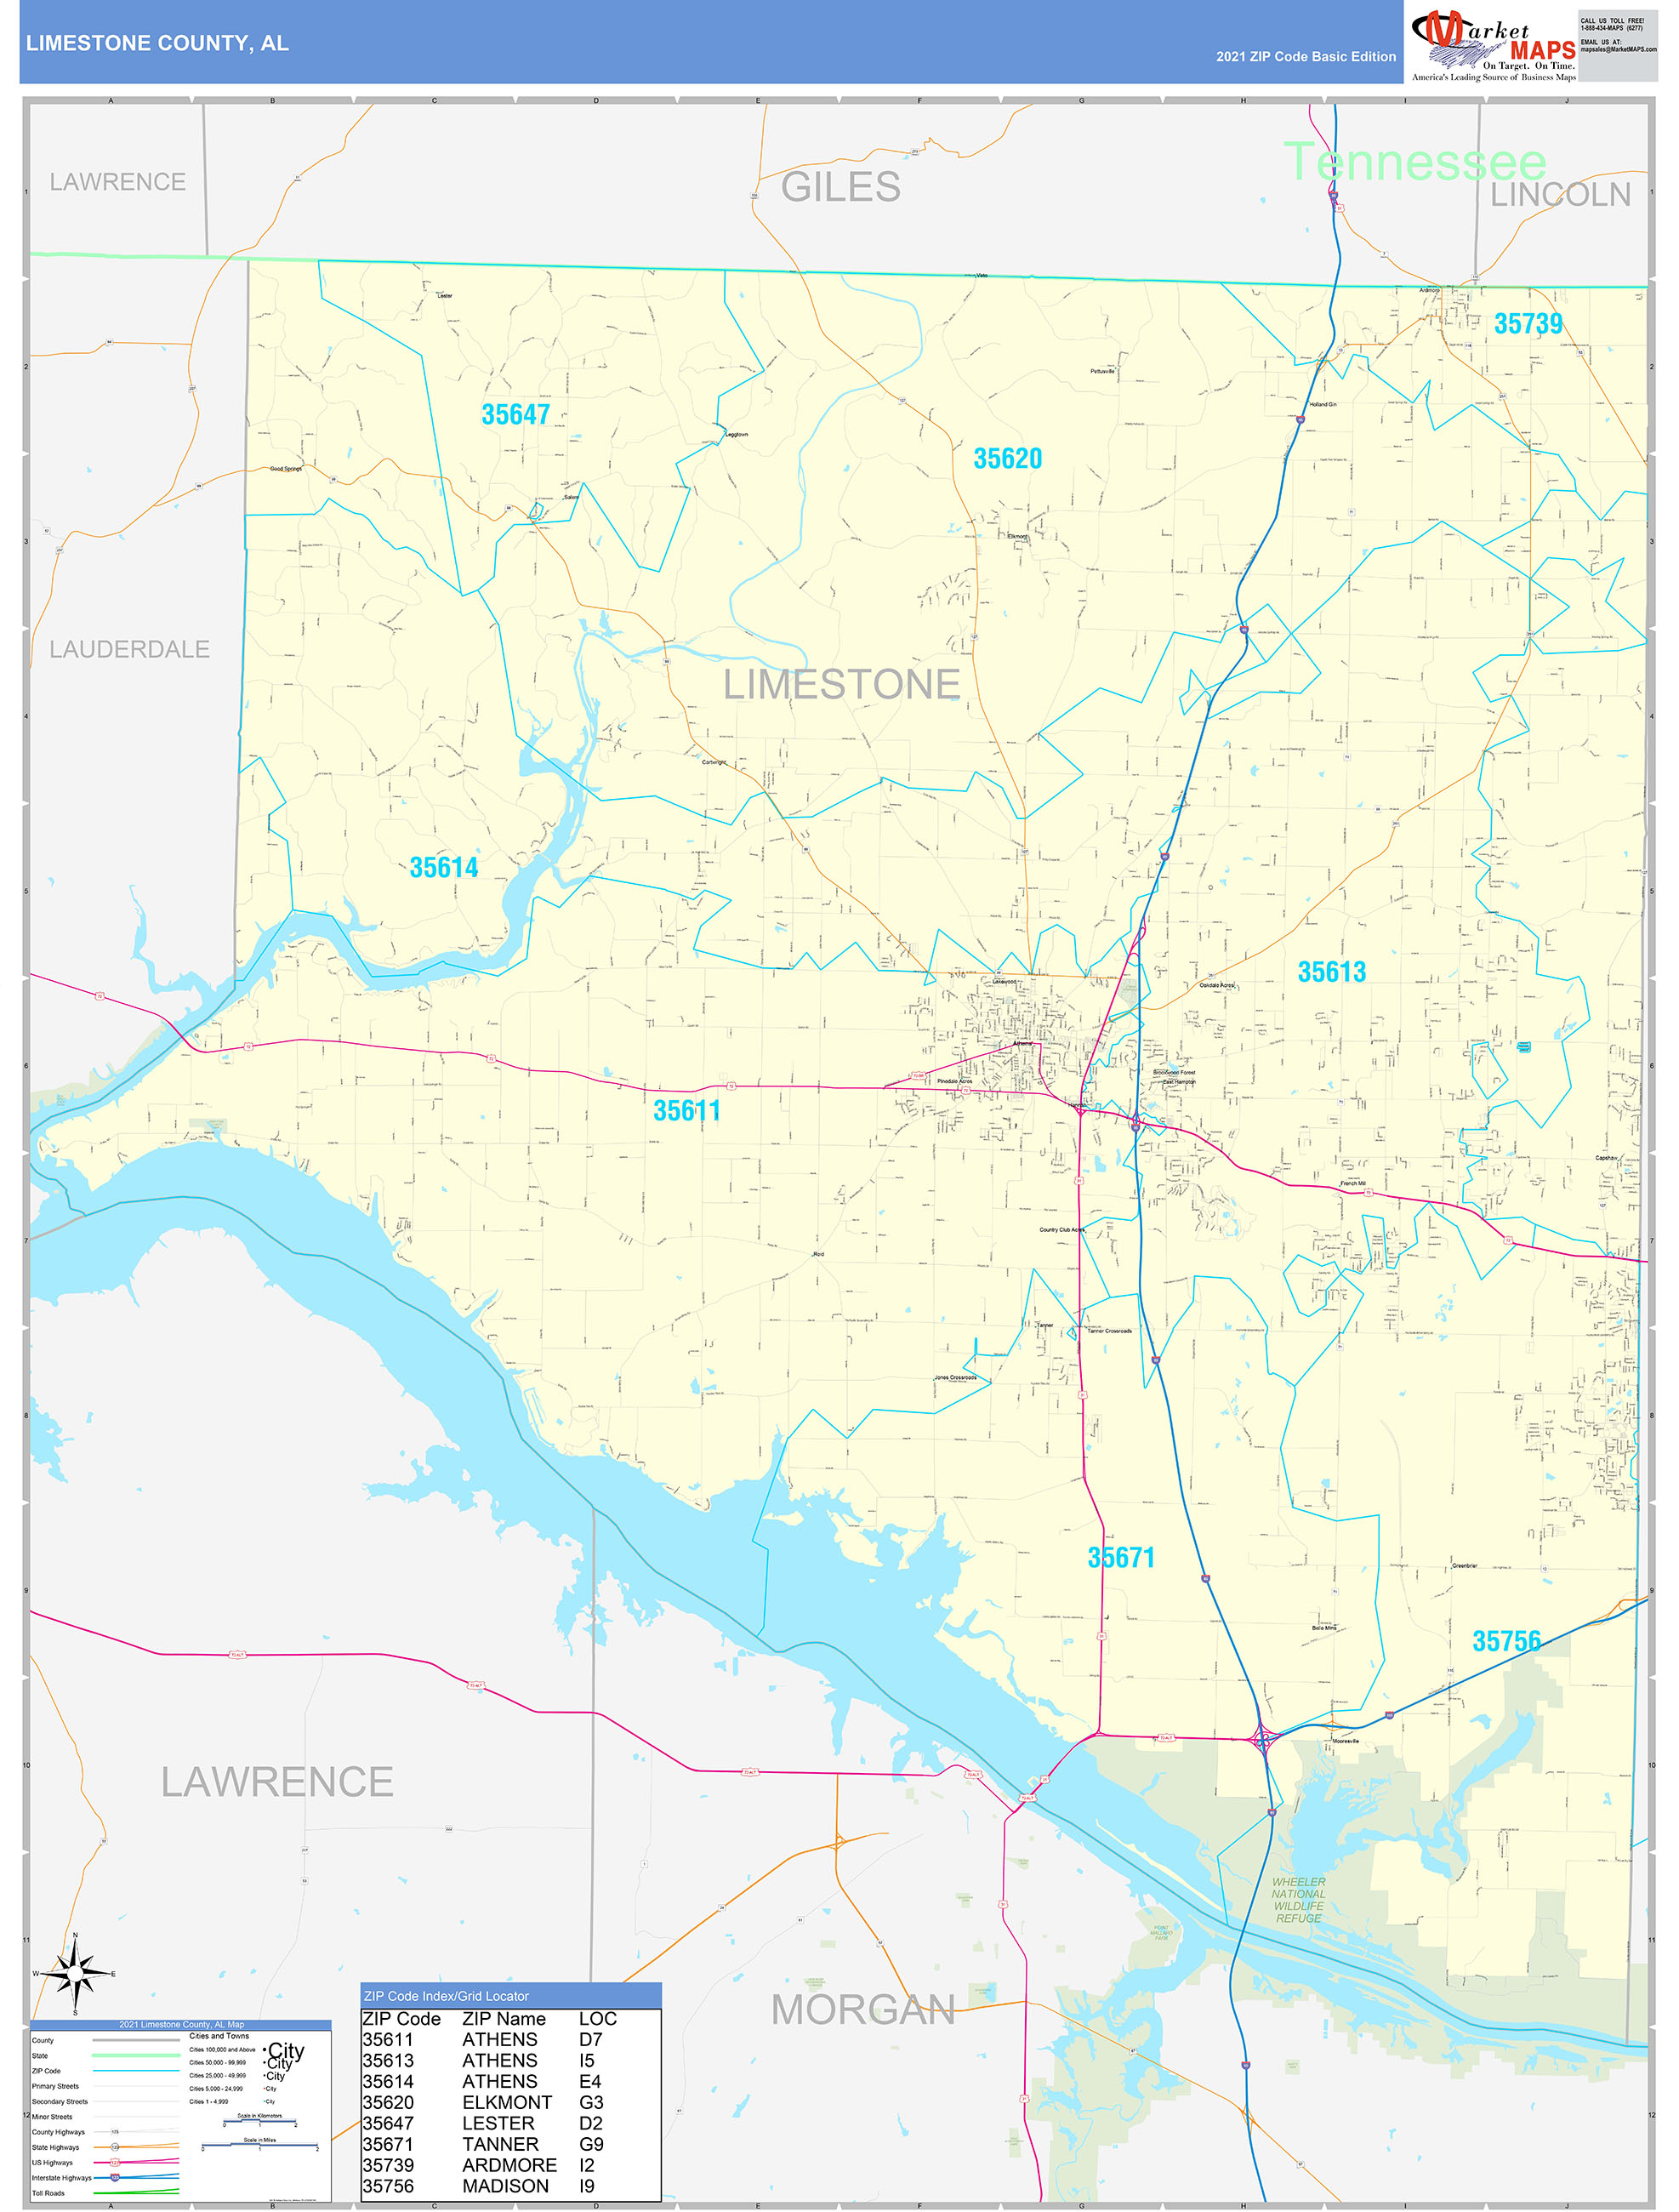 limestone-county-al-zip-code-wall-map-basic-style-by-marketmaps-mapsales